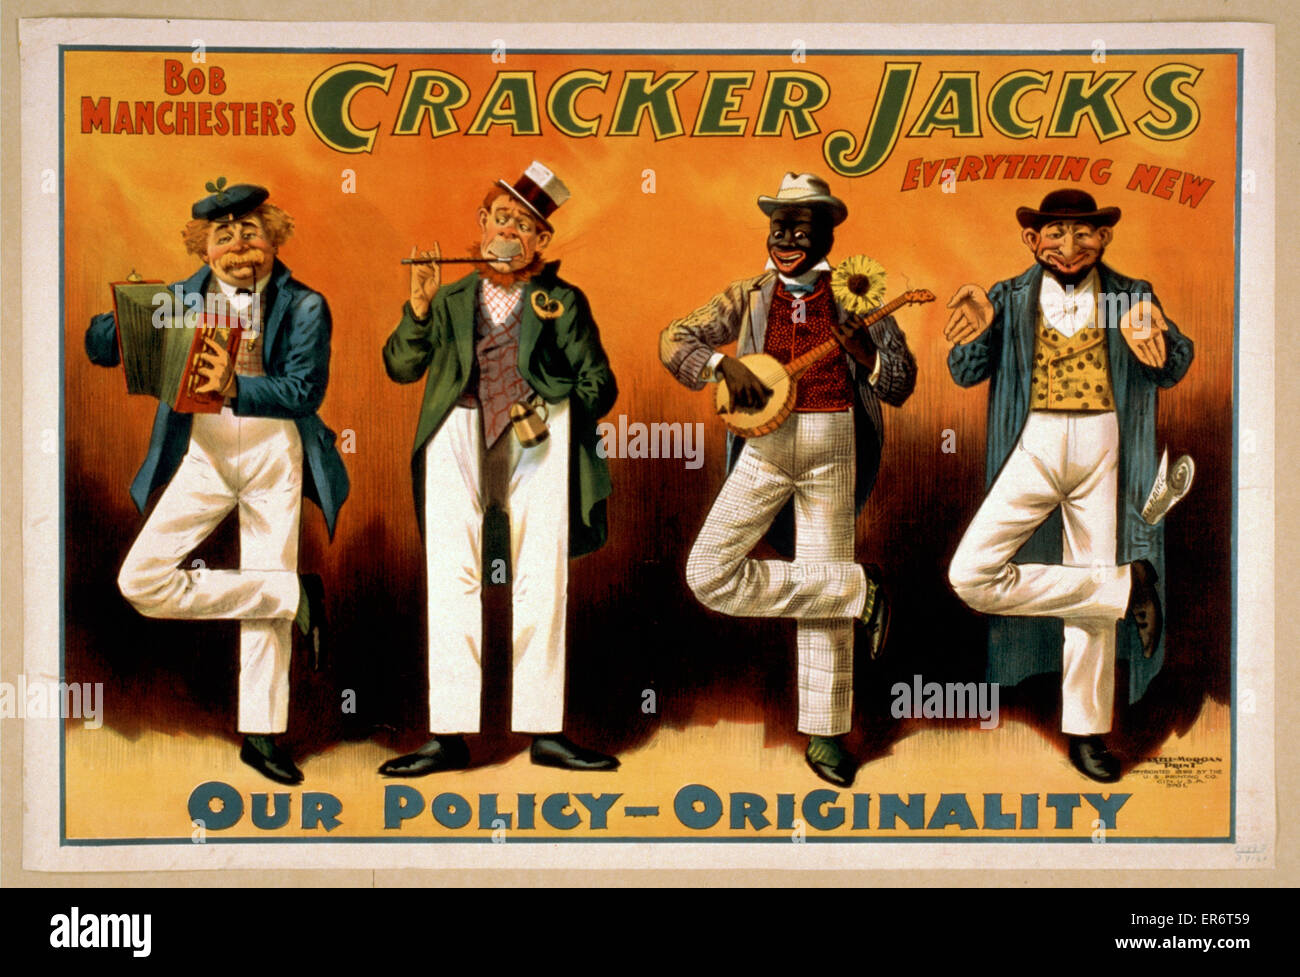 Bob Manchester's Cracker Jacks everything new Stock Photo